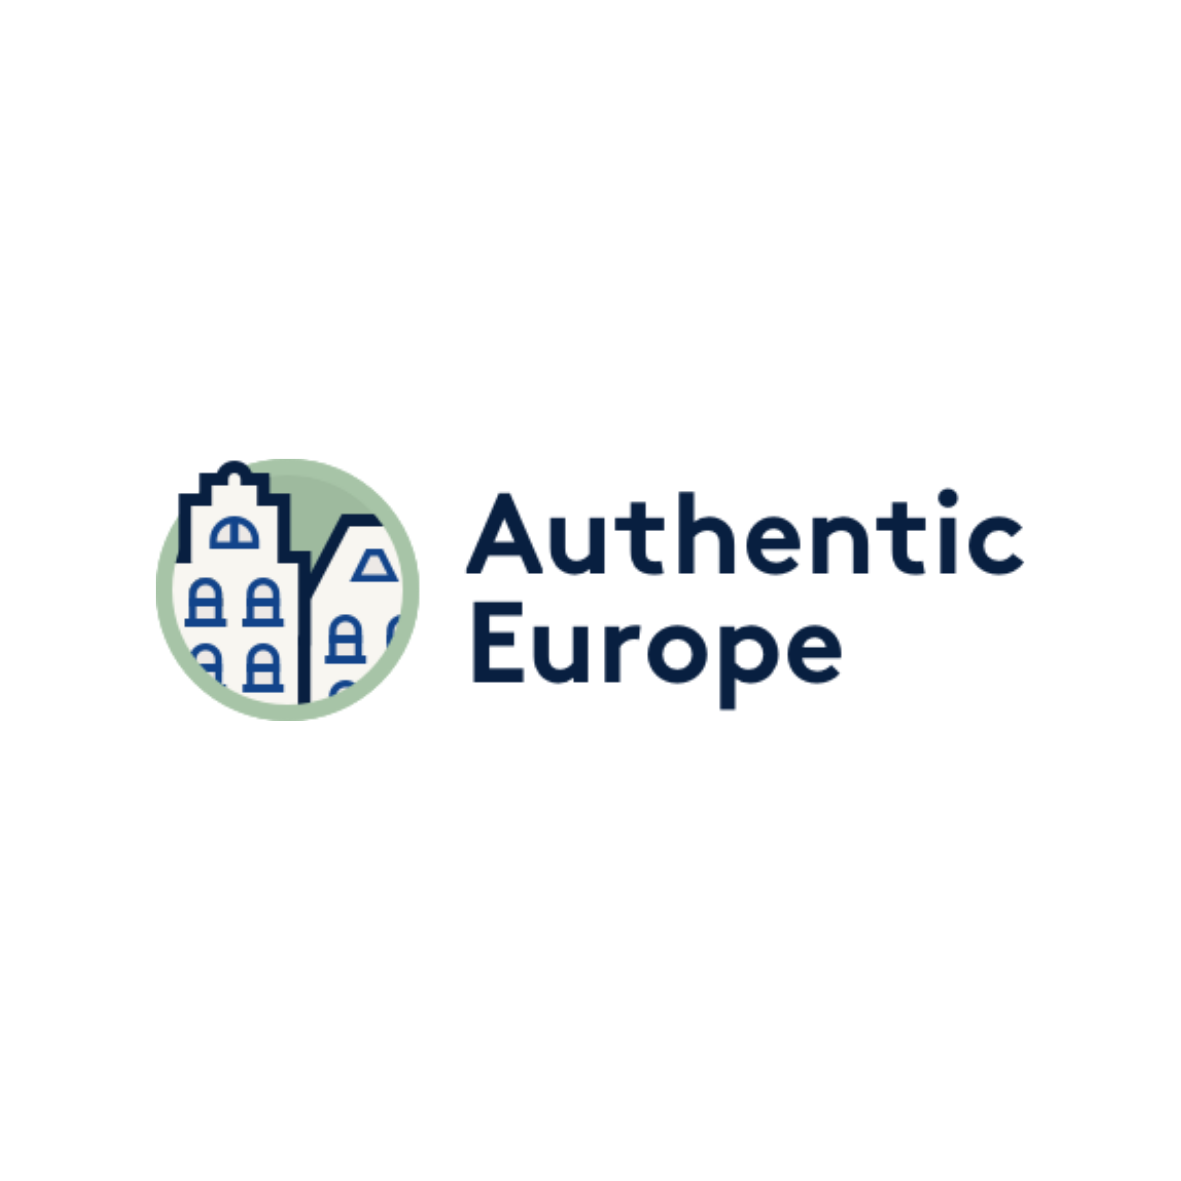 Authentic Europe